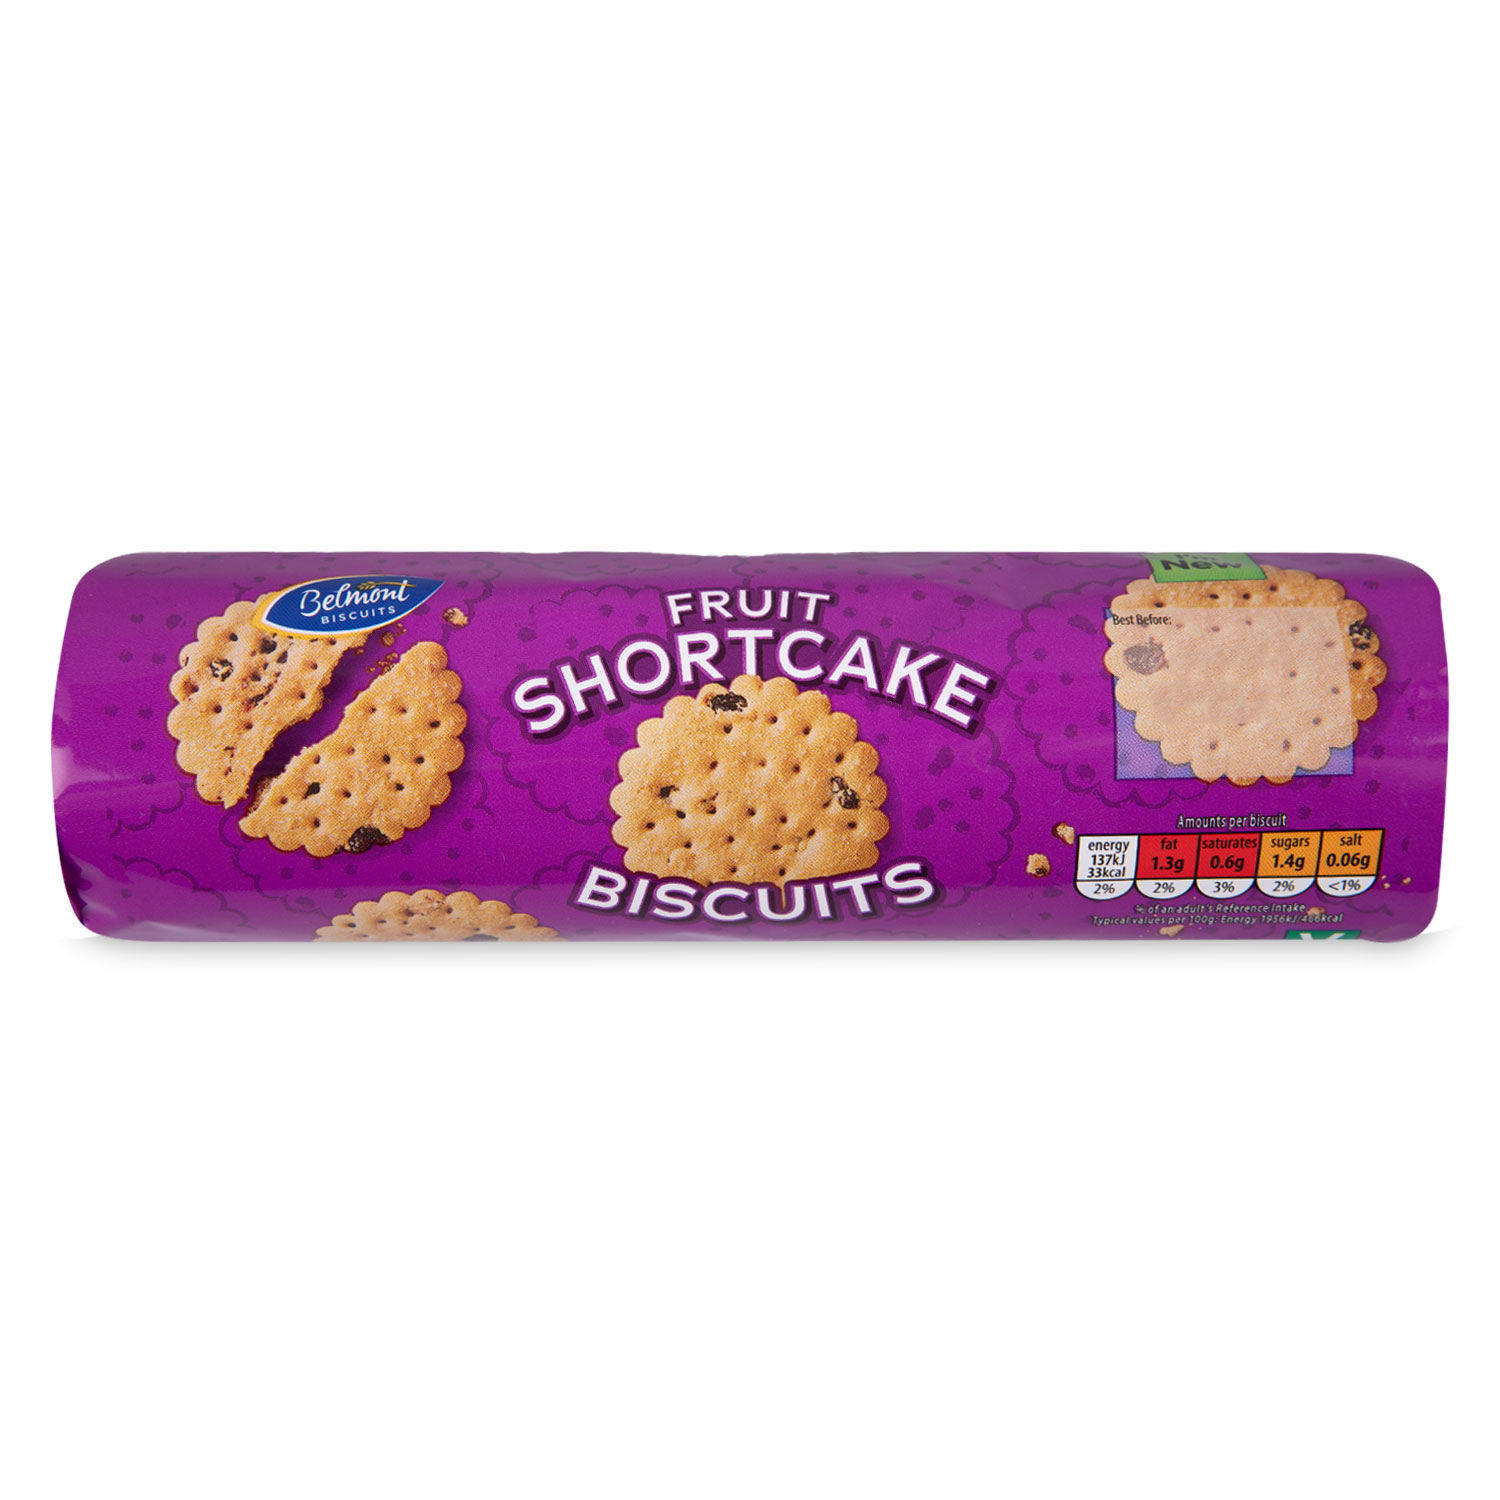 Belmont Fruit Shortcake Biscuits 200g